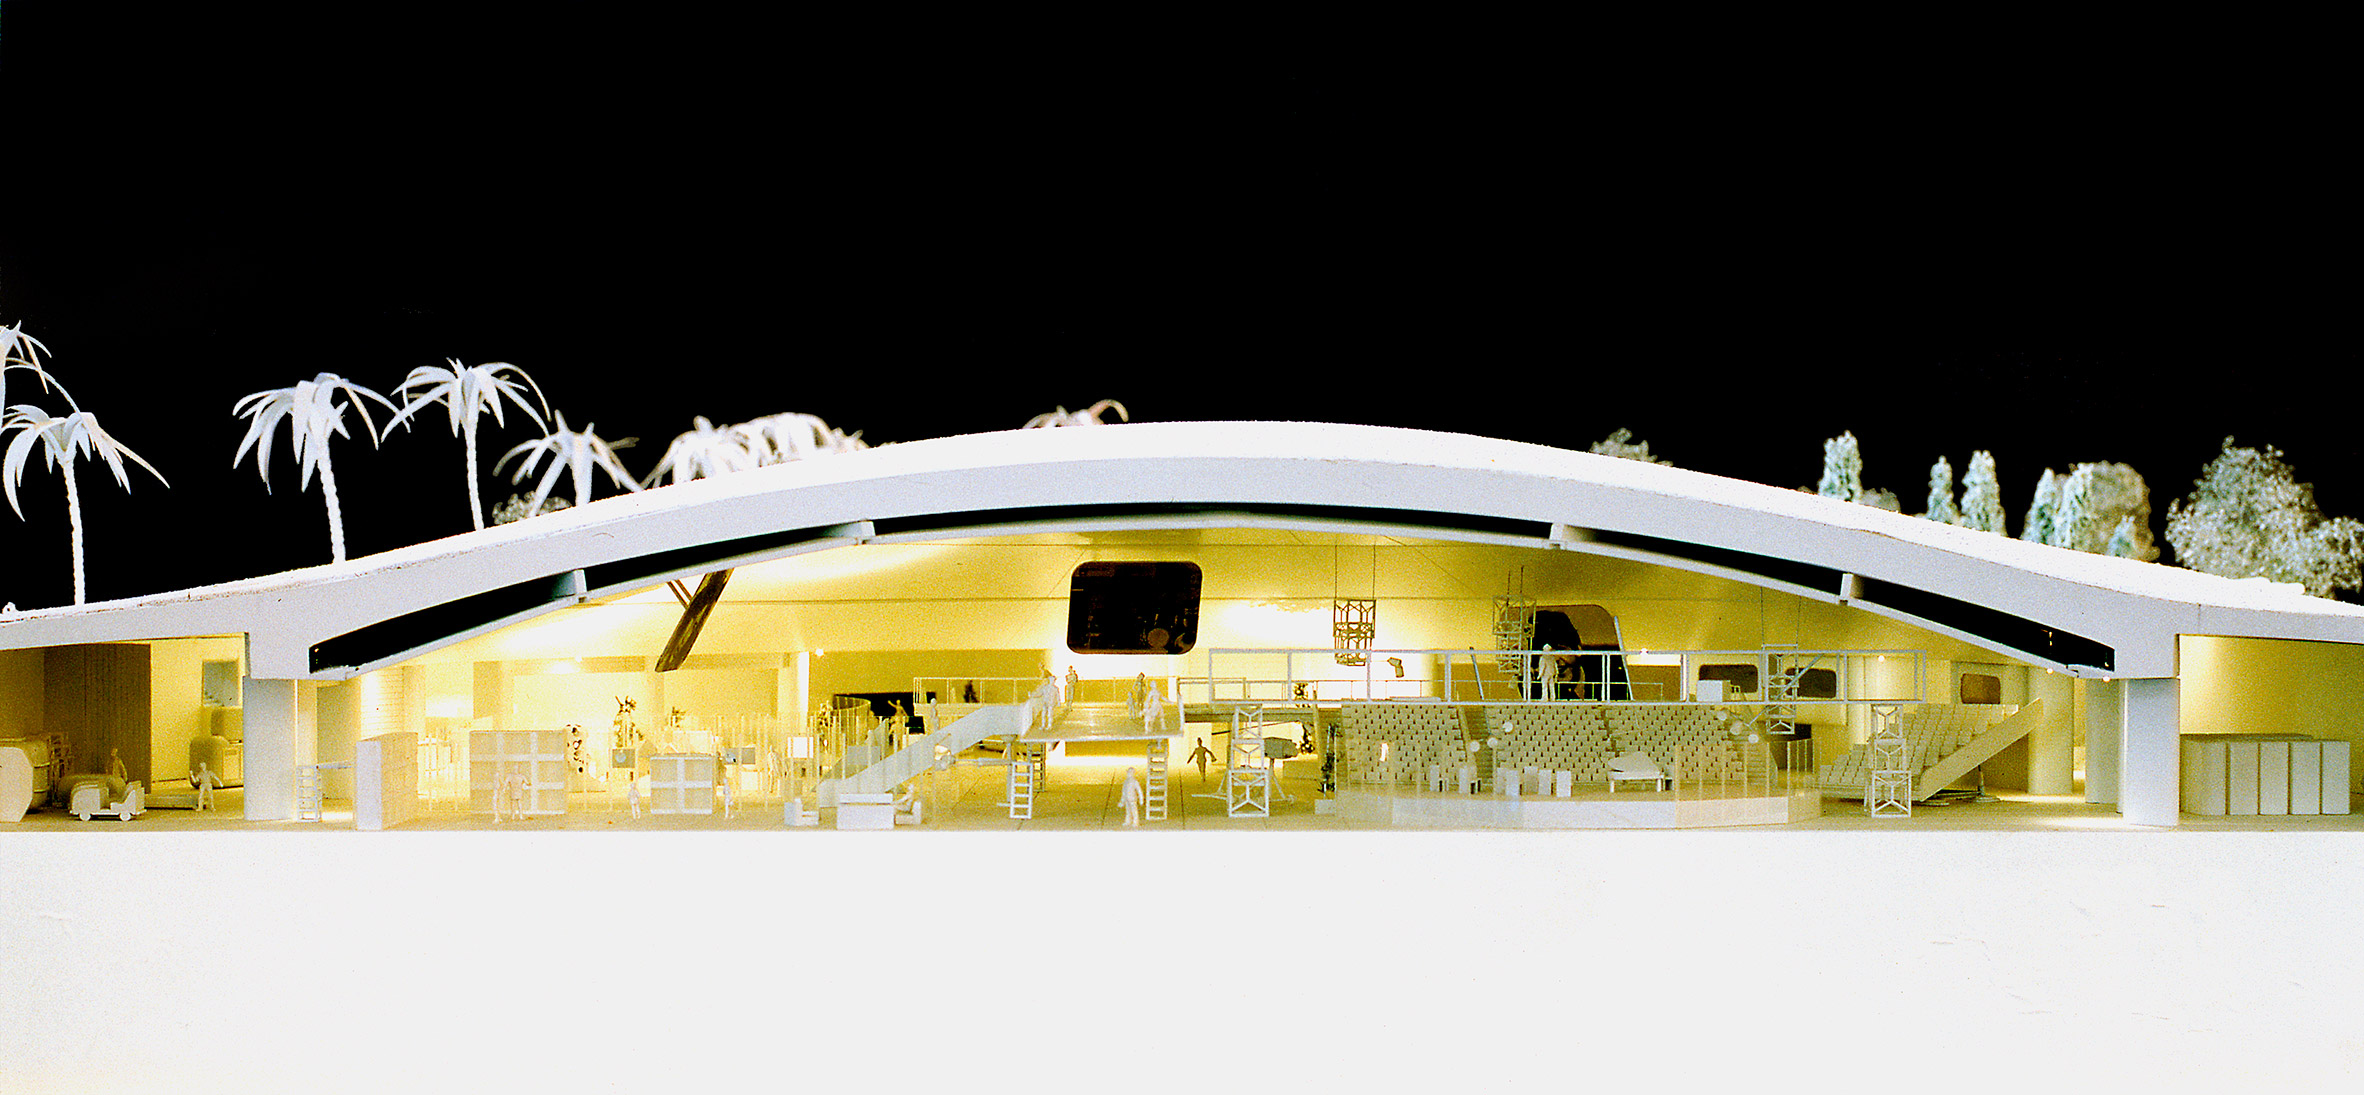 Monte Carlo entertainment centre by Archigram